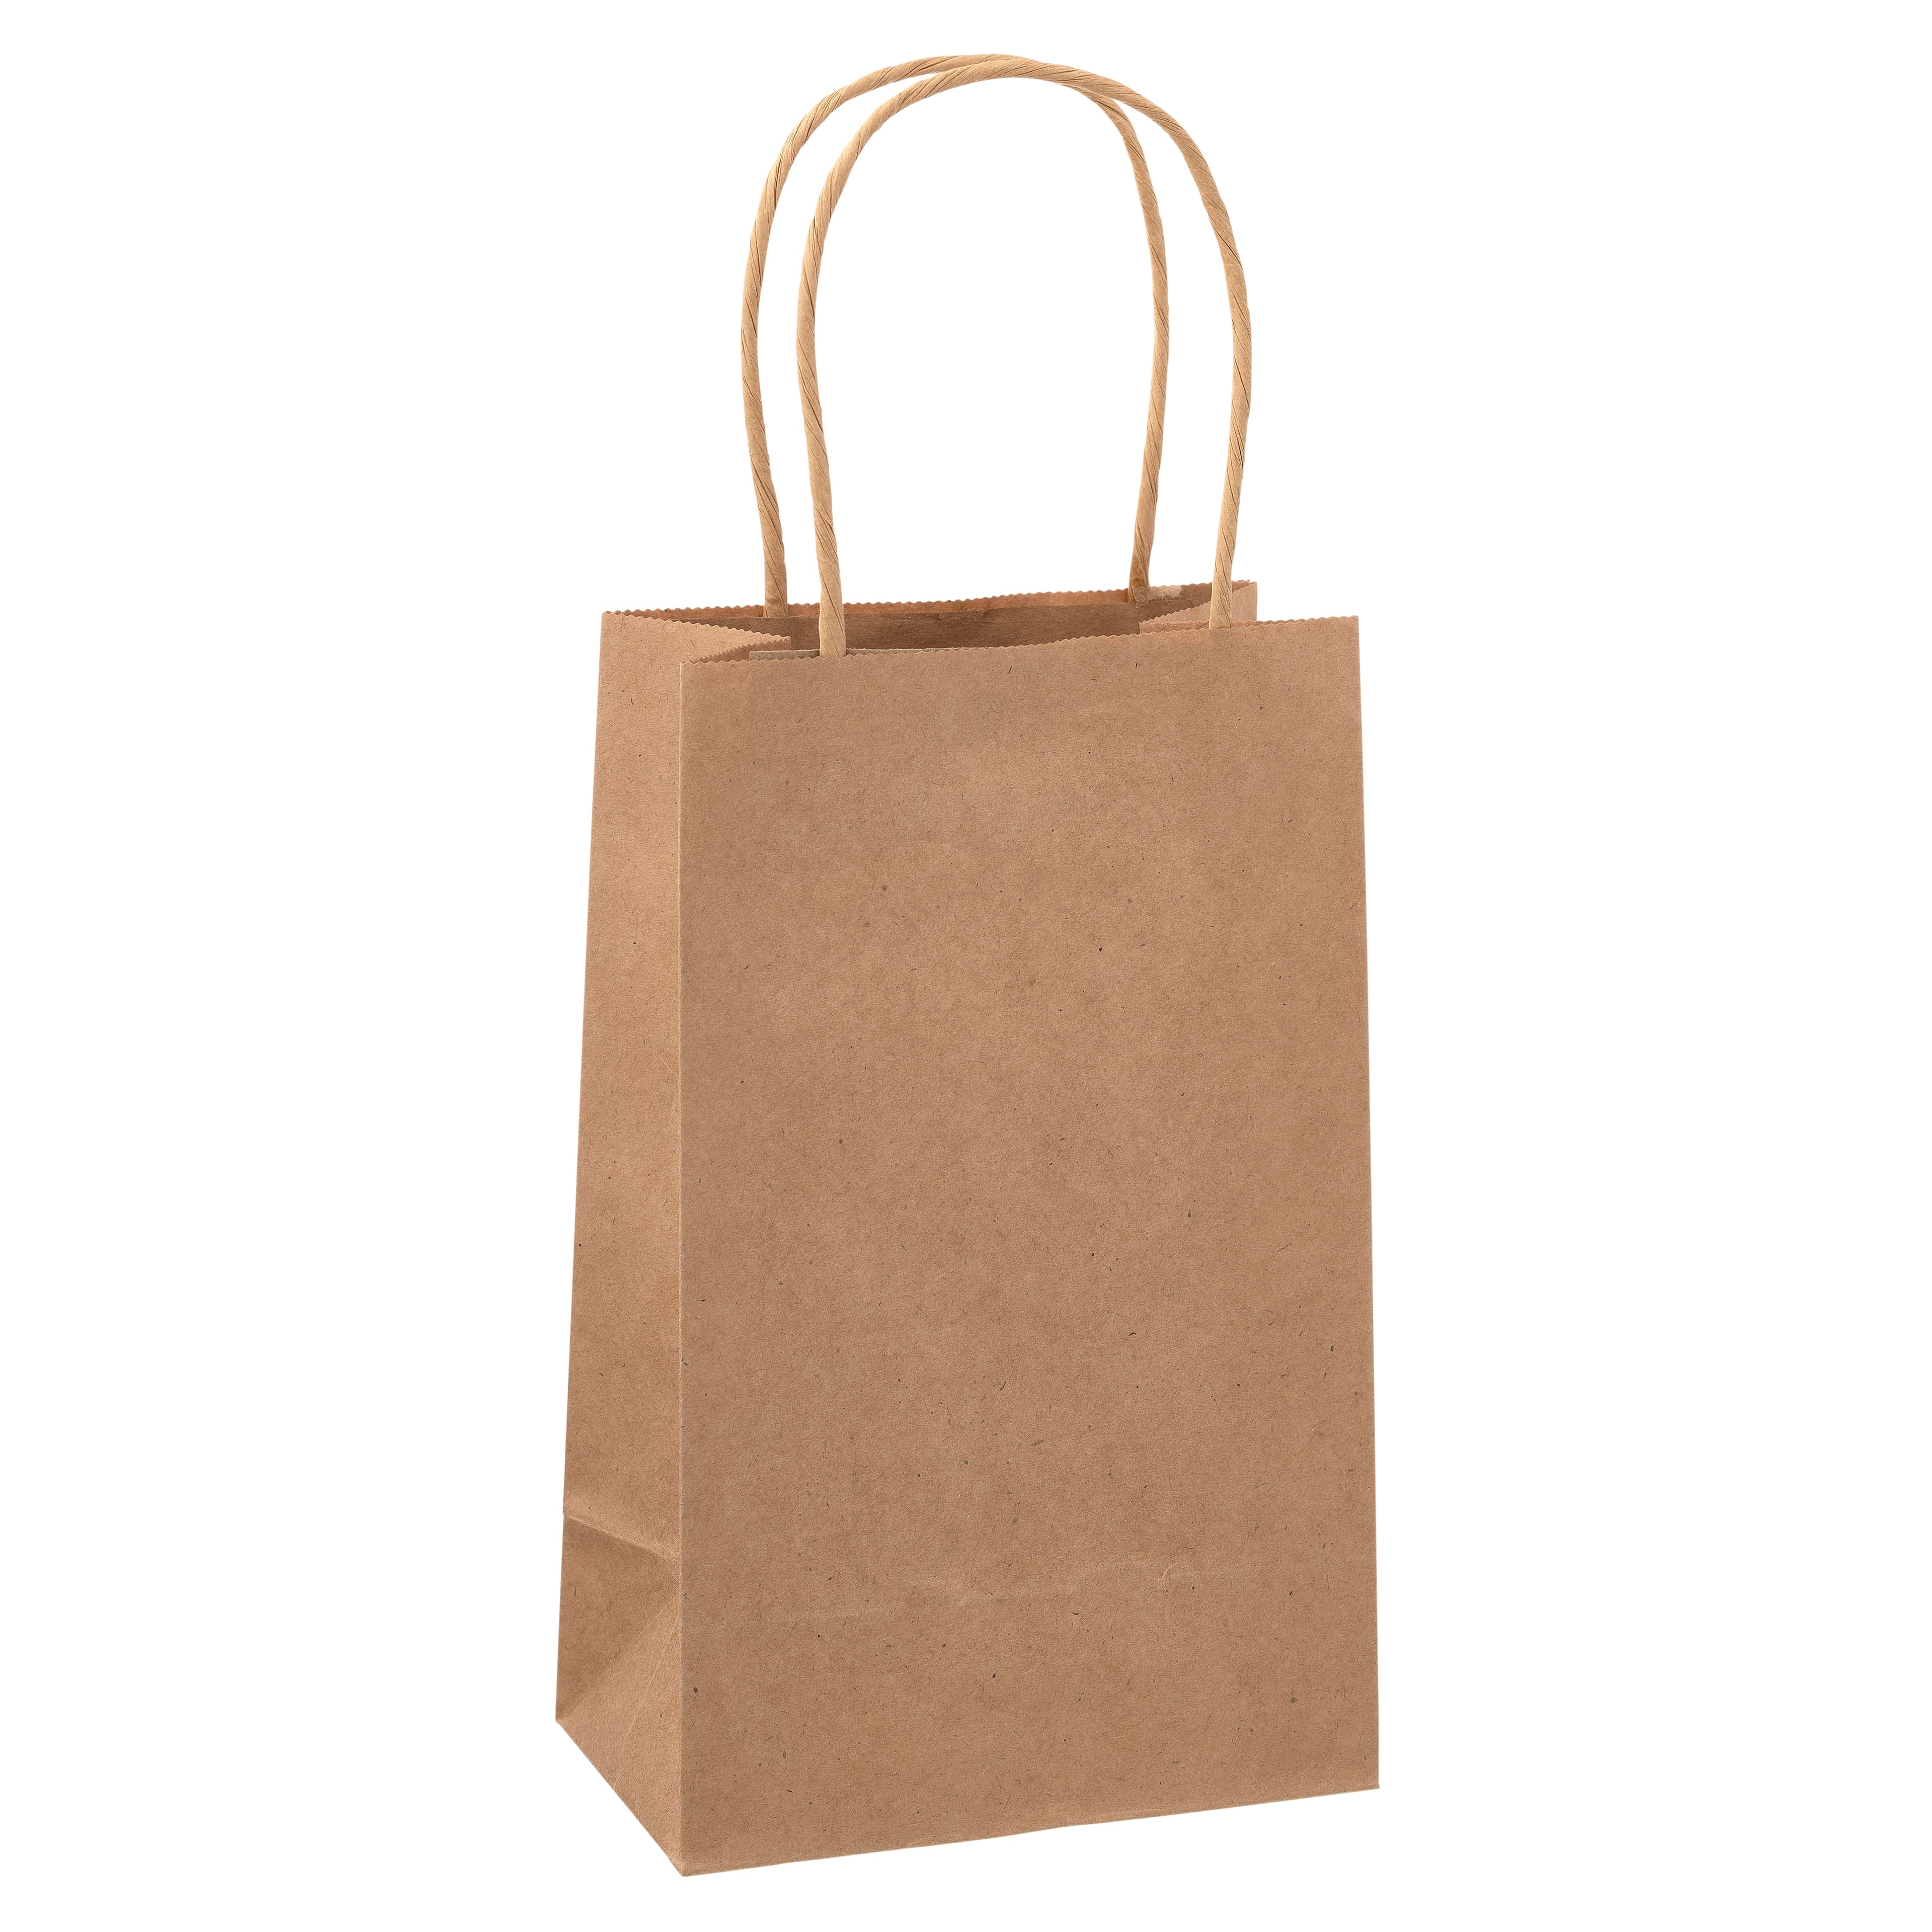 Tote Bag Diy Kit Change Branded Paper Bag To a Real Bag